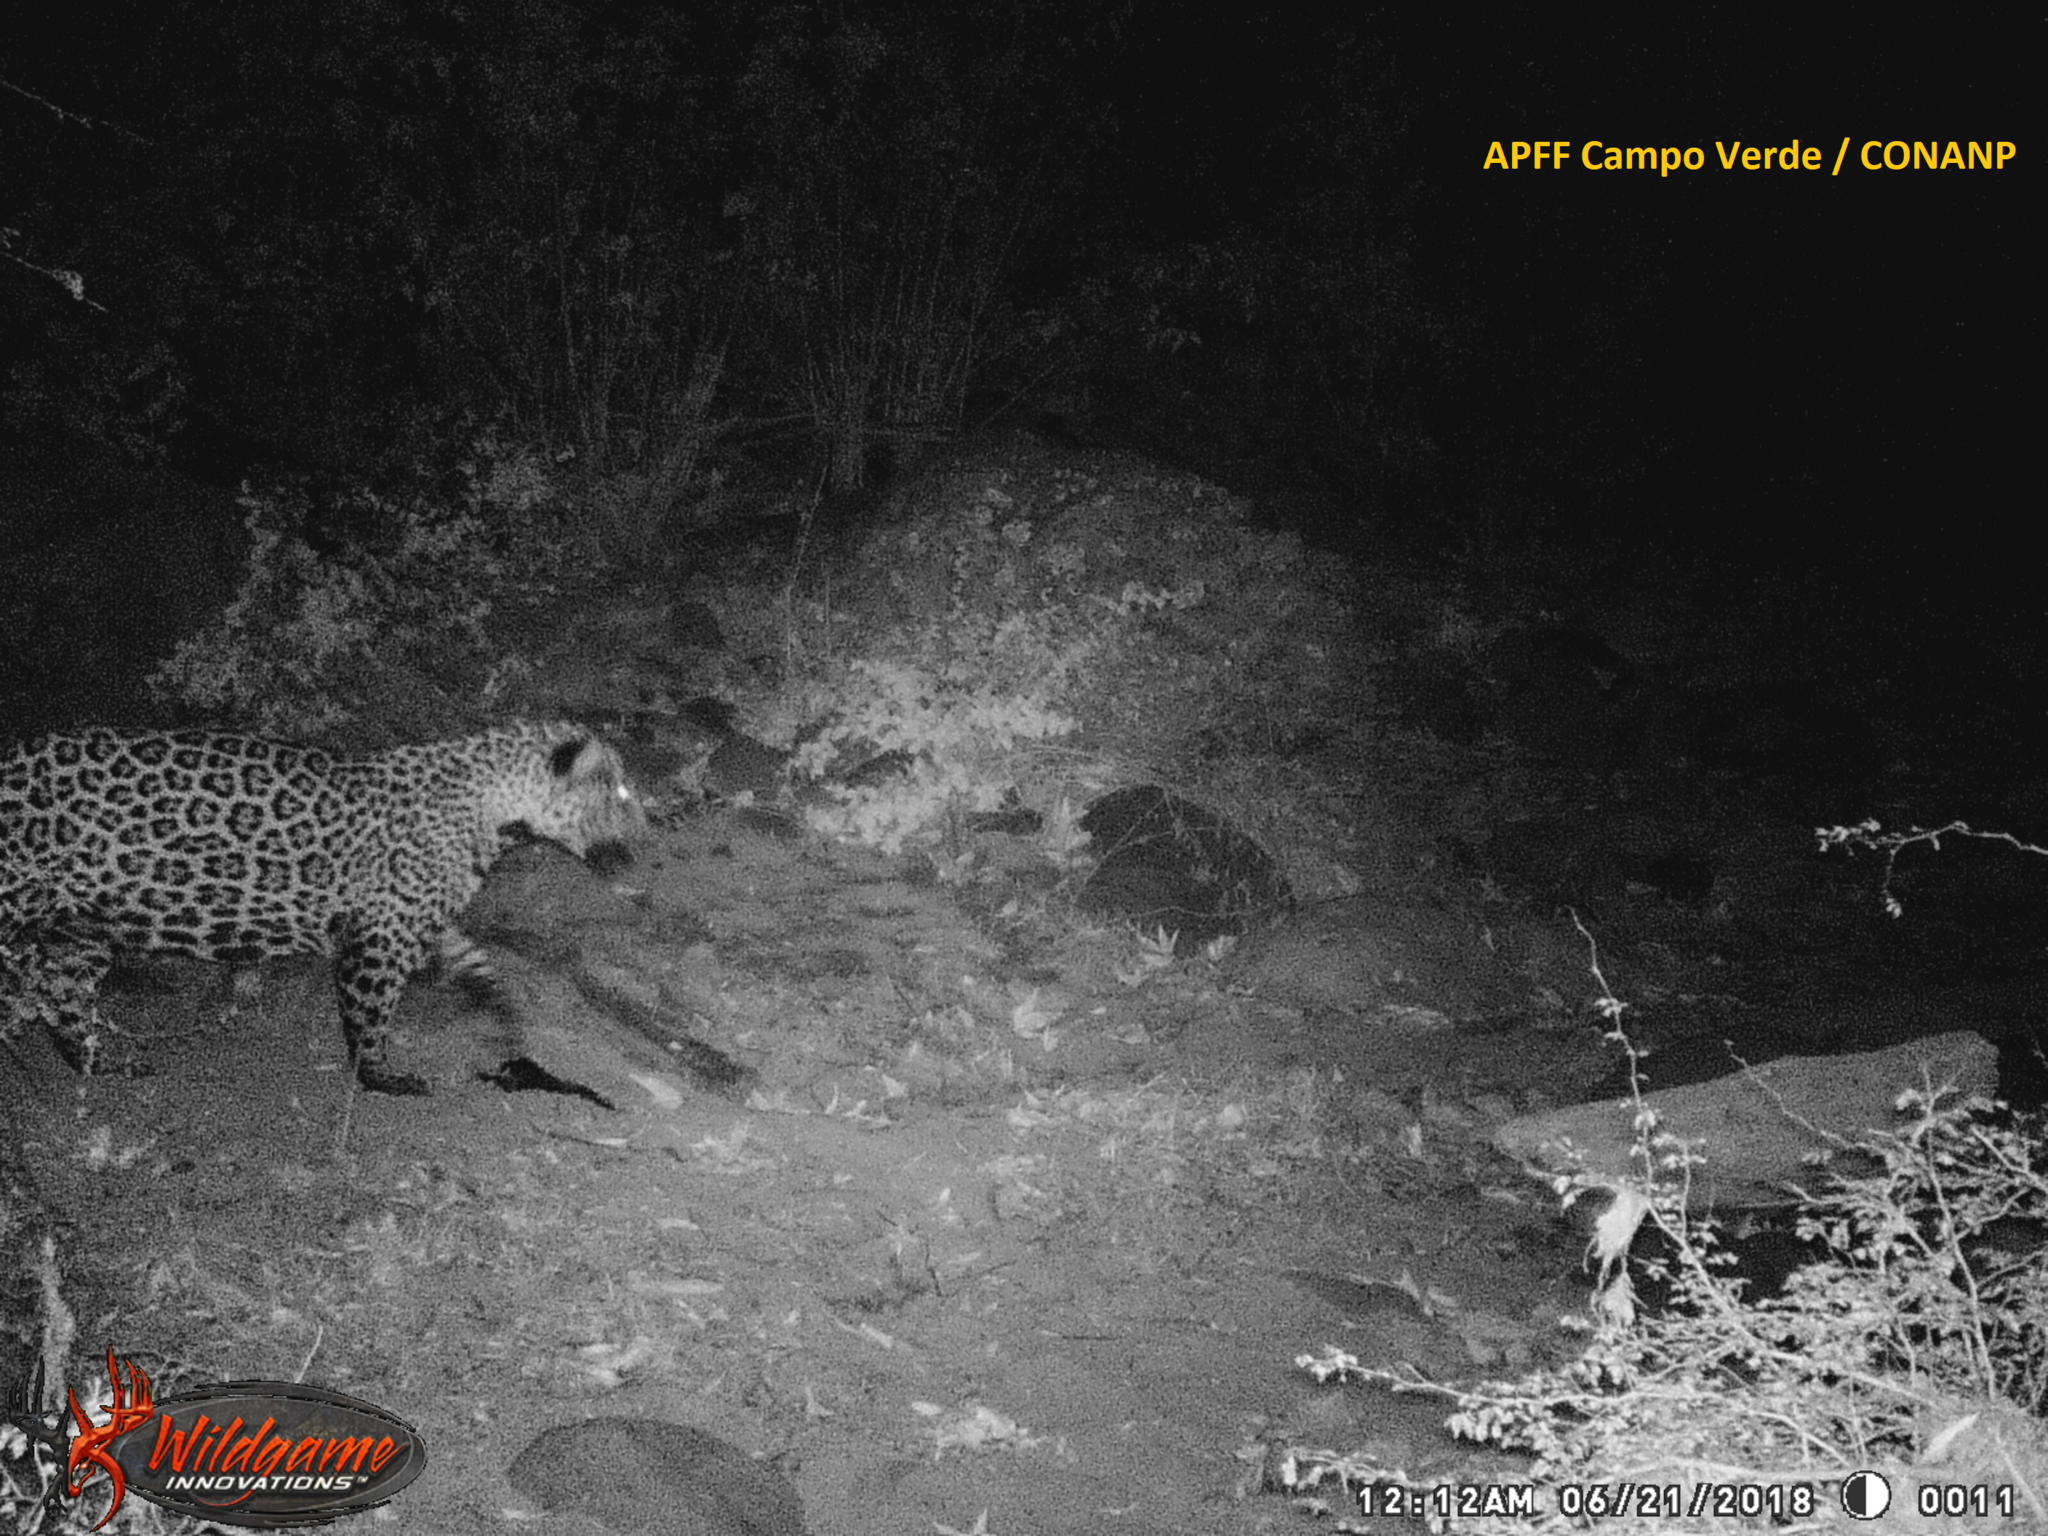 Jaguar (Panthera onca) - Monde Animal